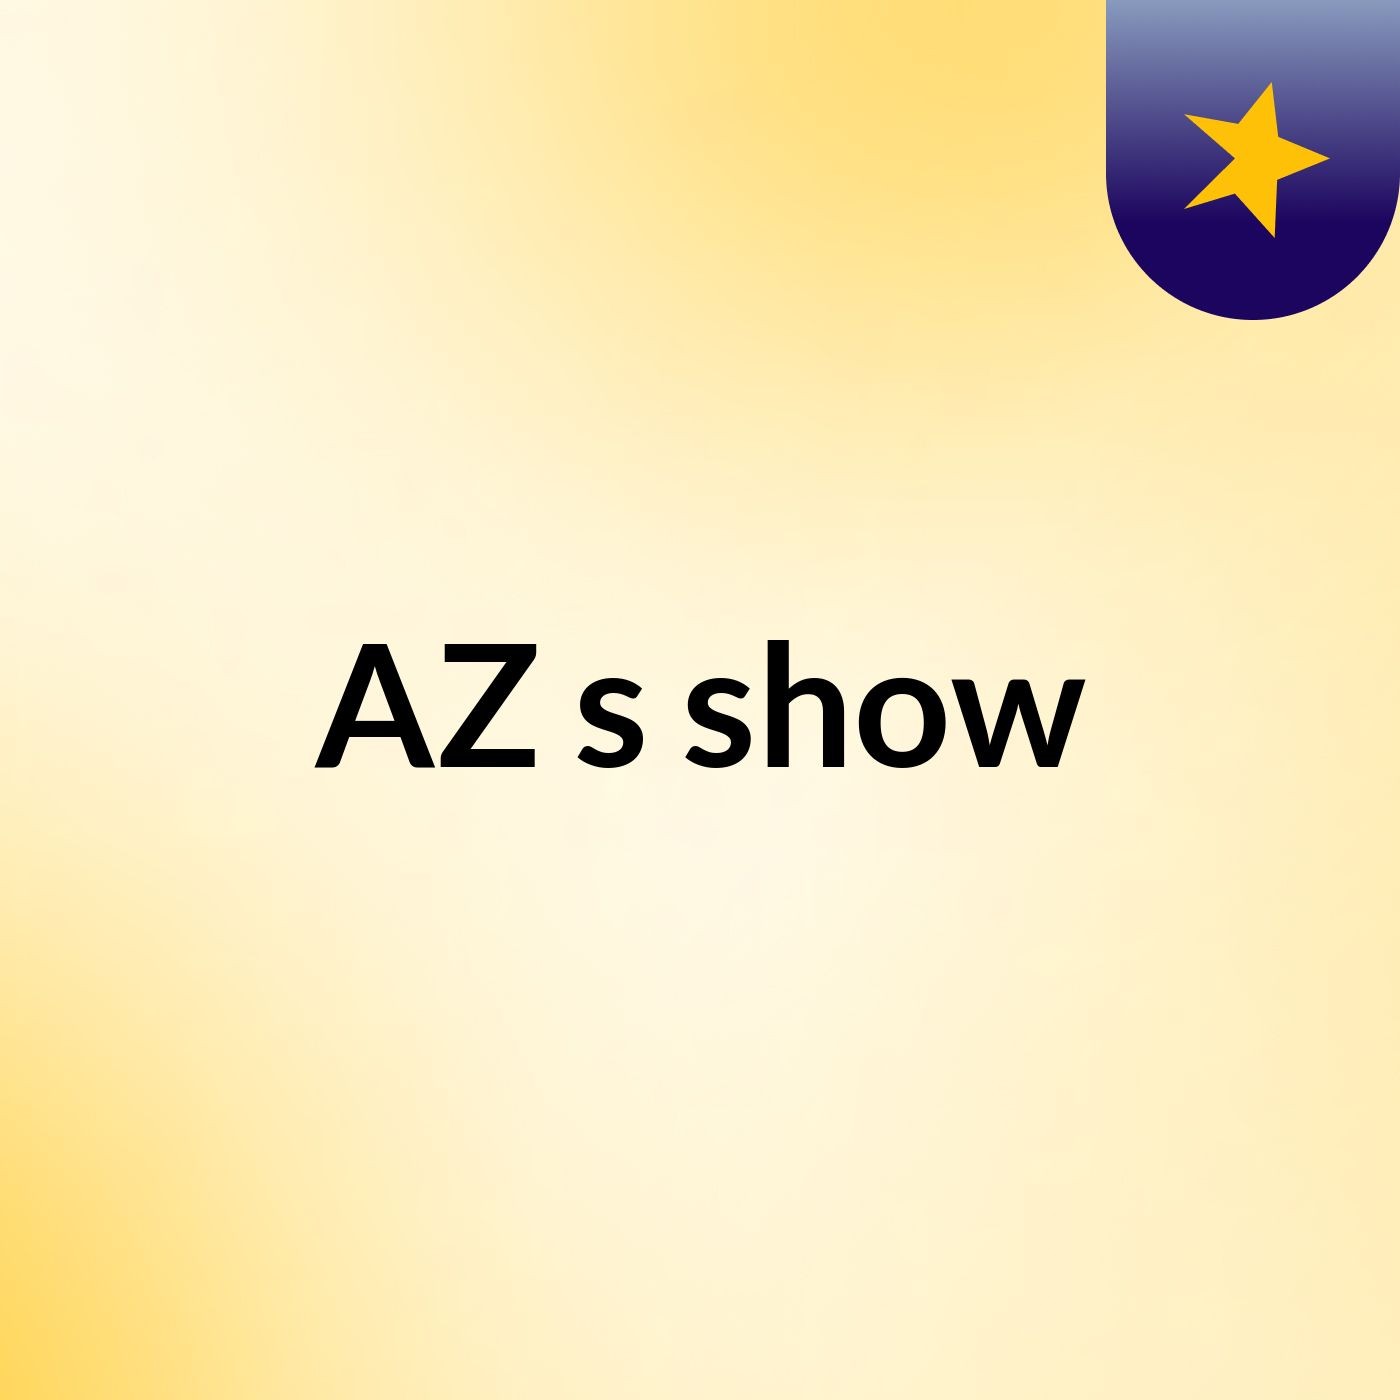 AZ's show